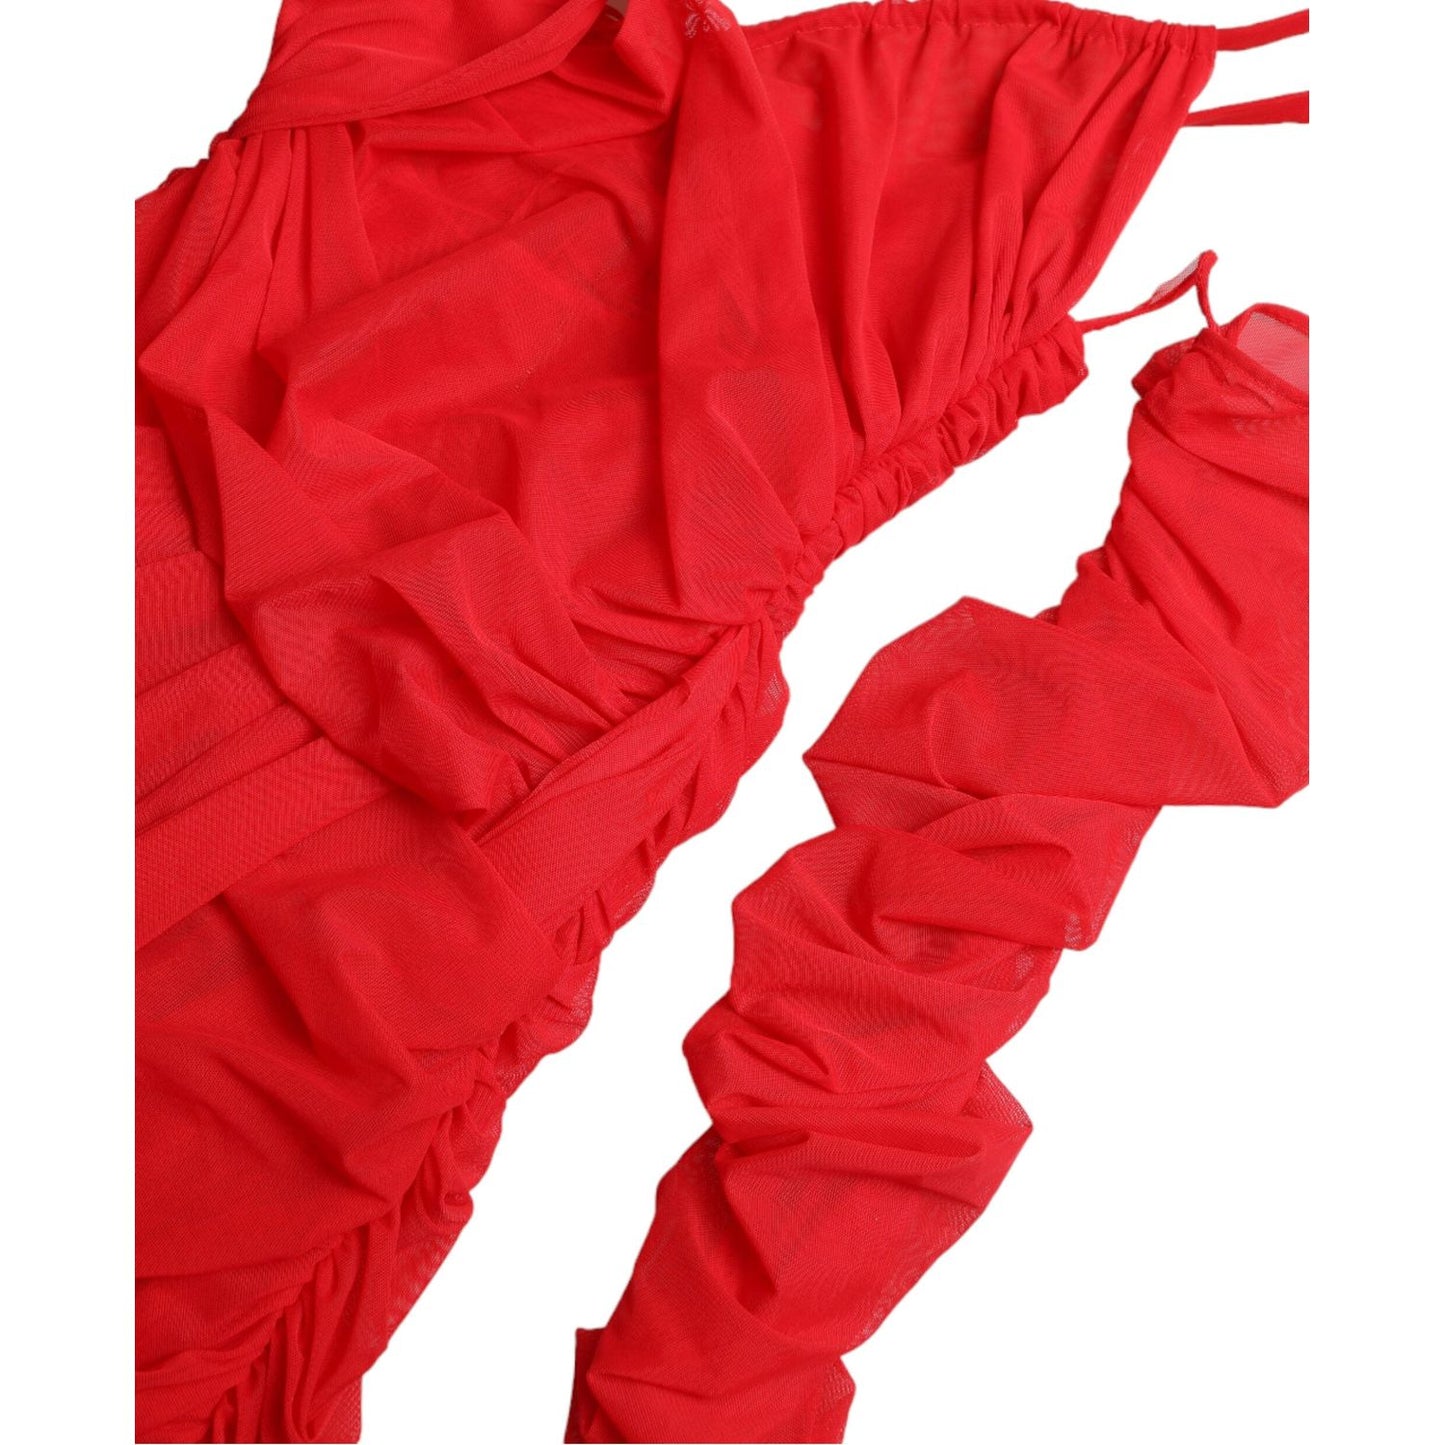 Dolce & Gabbana Radiant Red Stretch Satin Midi Dress red-nylon-stretch-cut-out-midi-dress